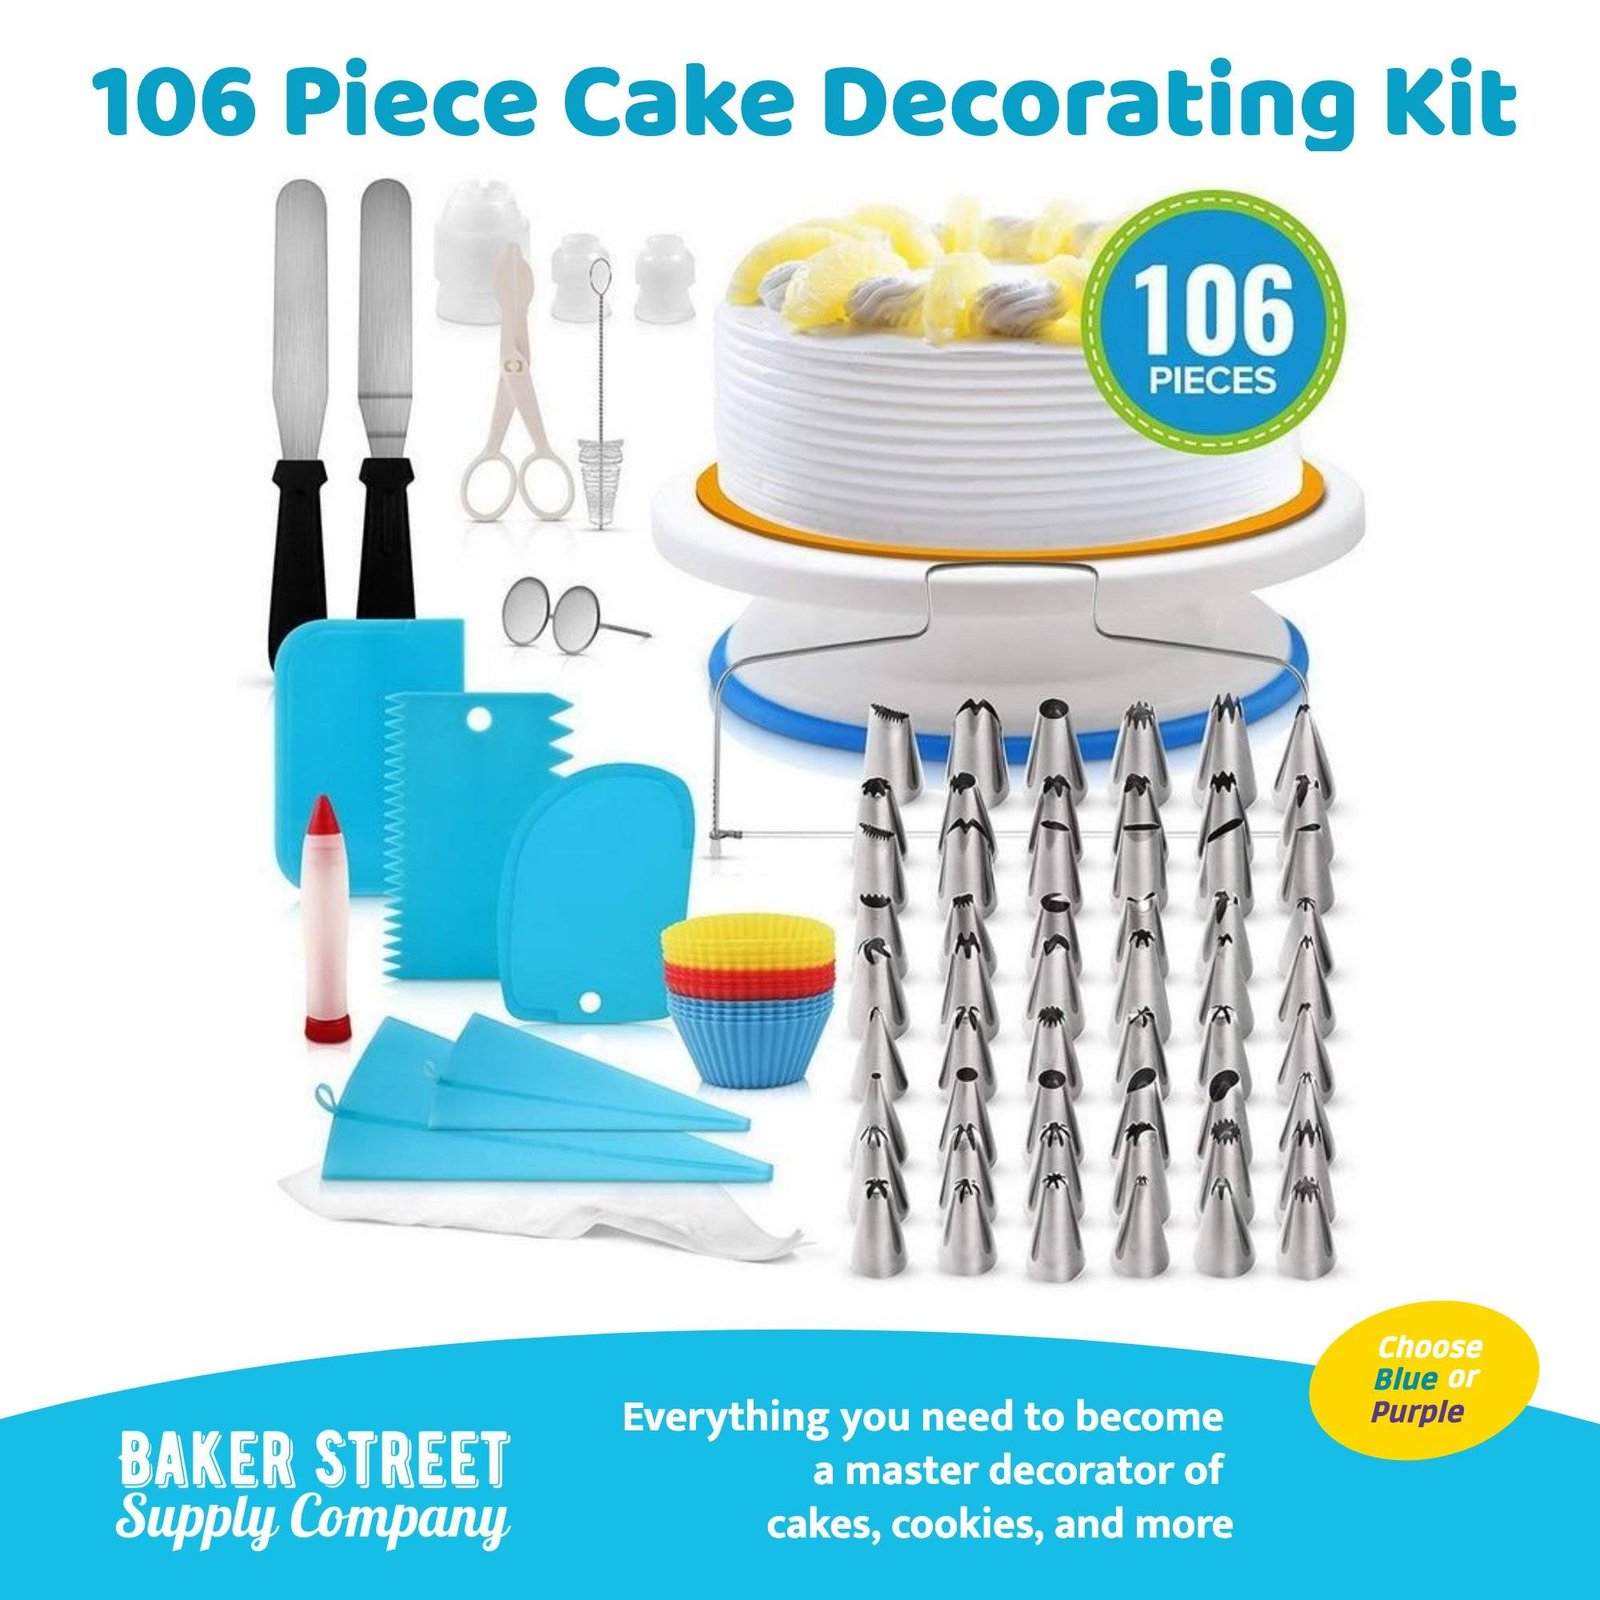 https://bakerstreetsupply.com/wp-content/uploads/2020/06/106-Piece-Cake-Decorating-Kit.jpg